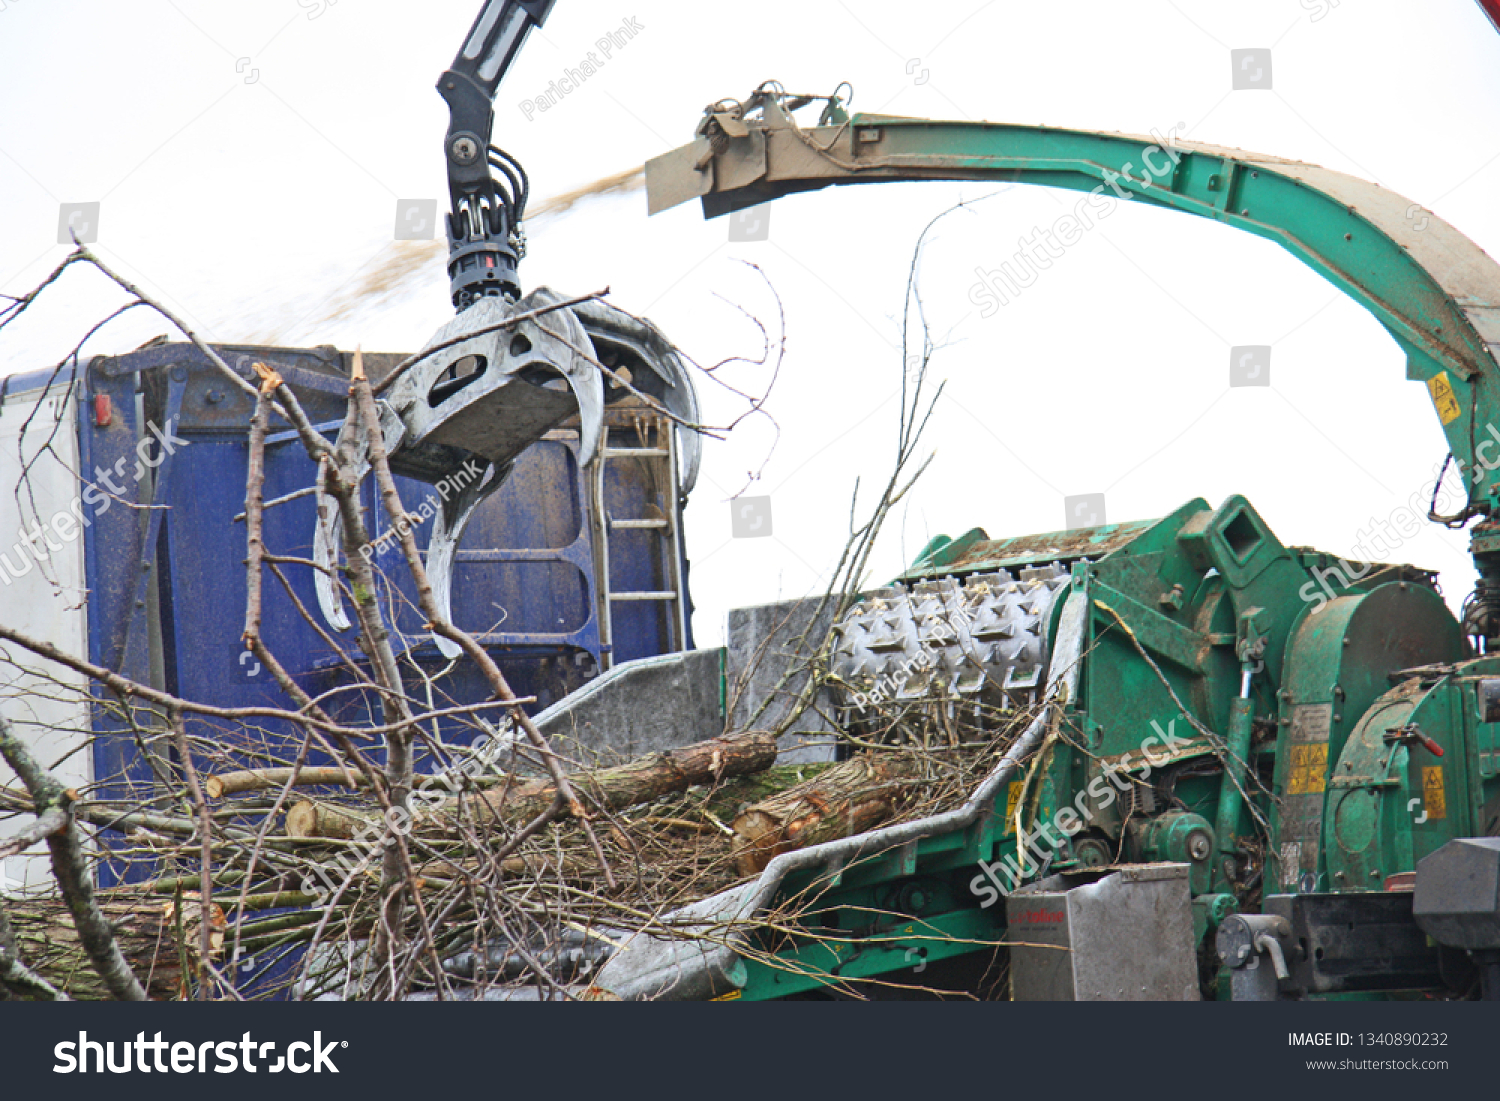 Branching machine, crane, crushing a branch in farm #1340890232